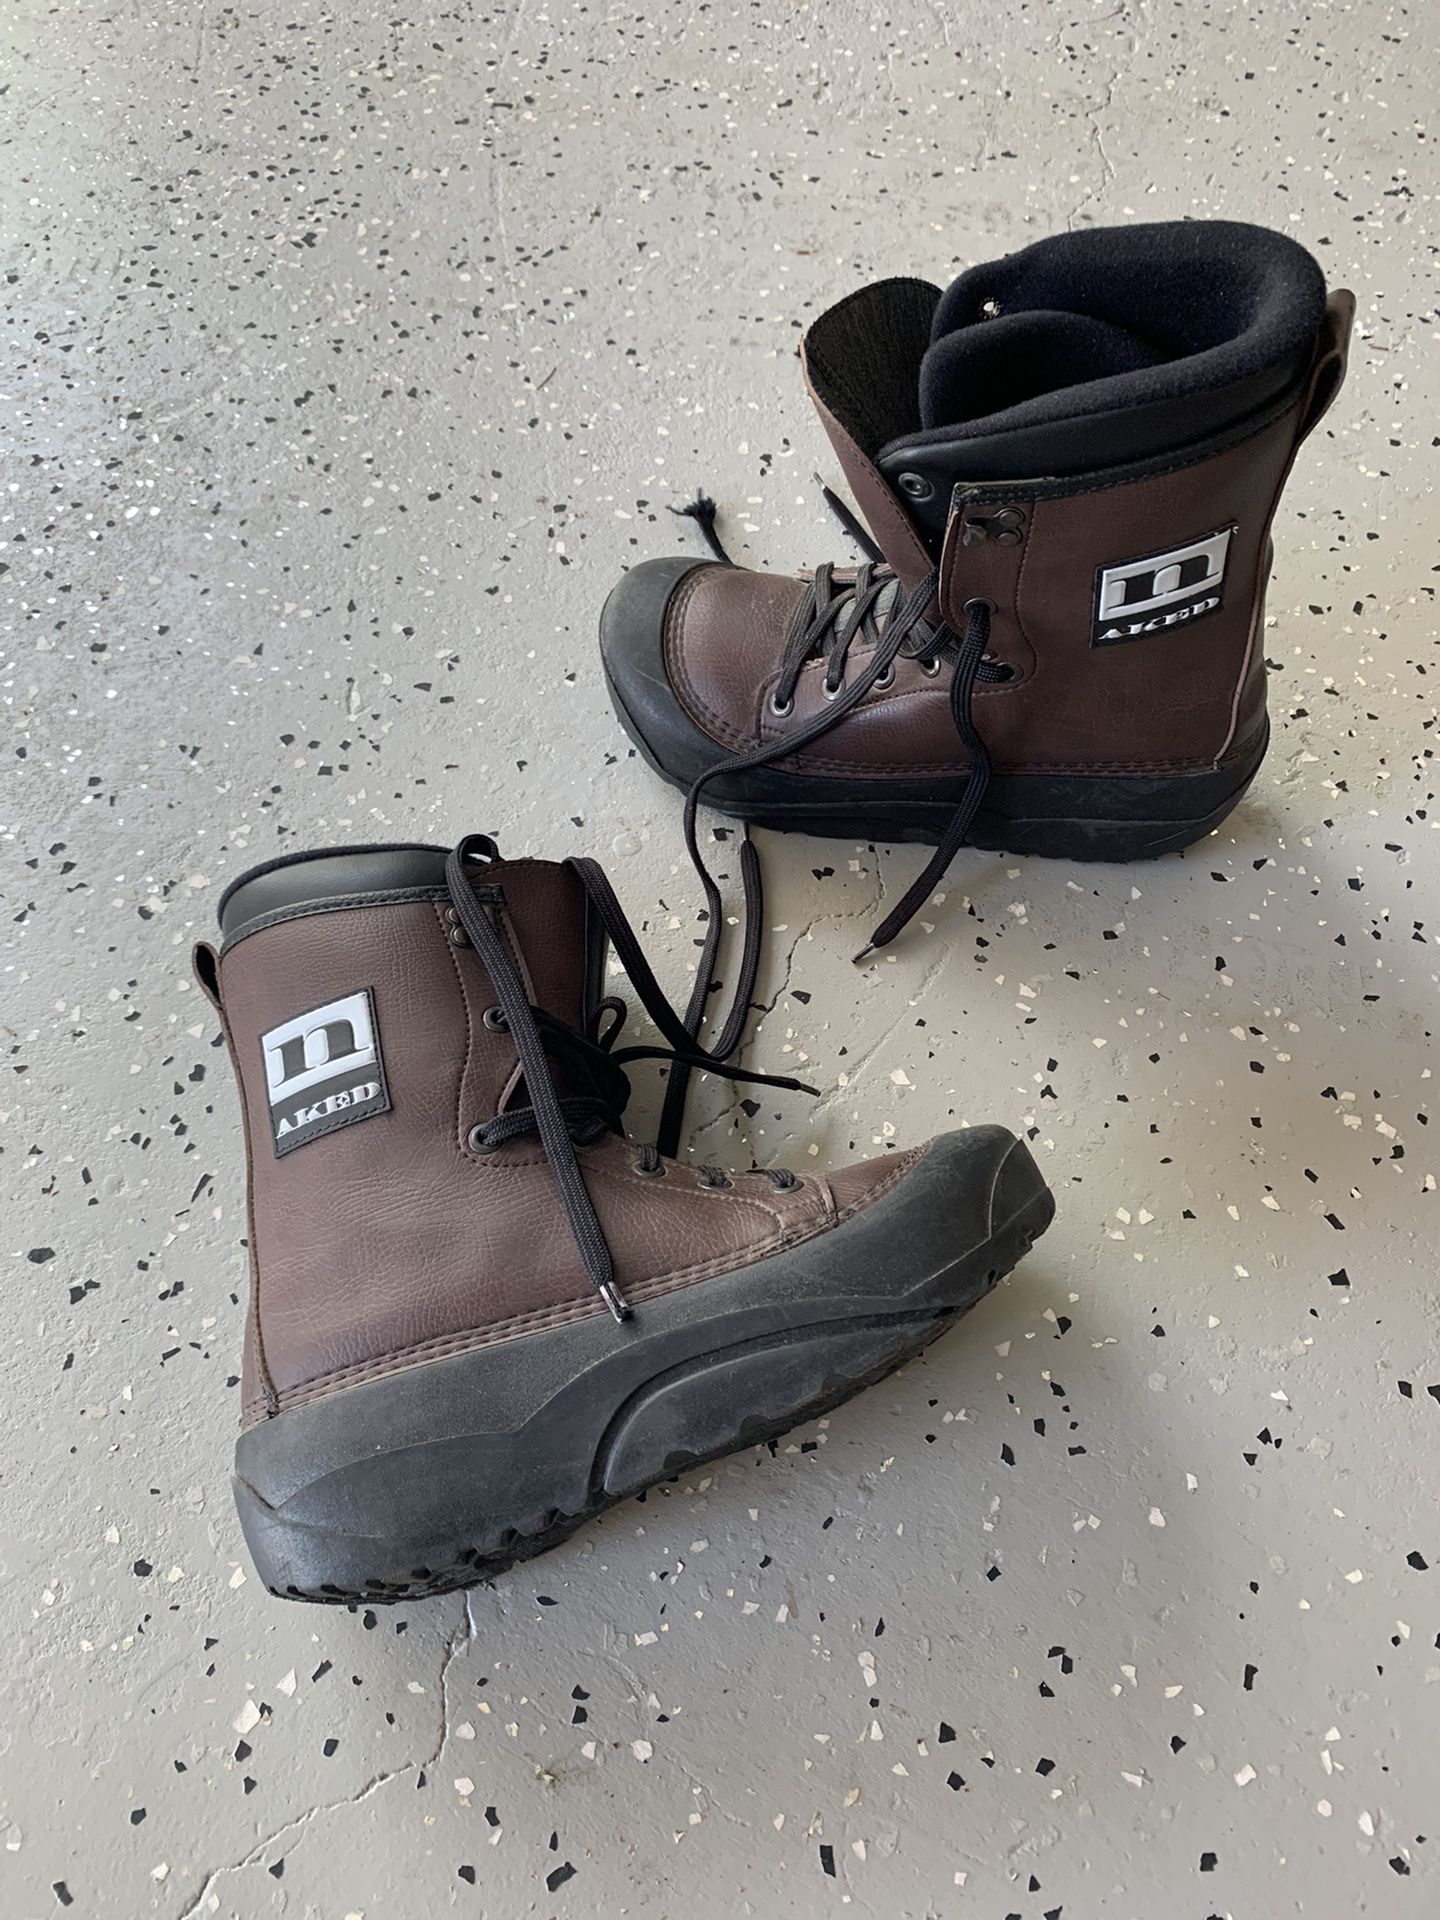 Snowboard Boots Size 9.5 Men’s 